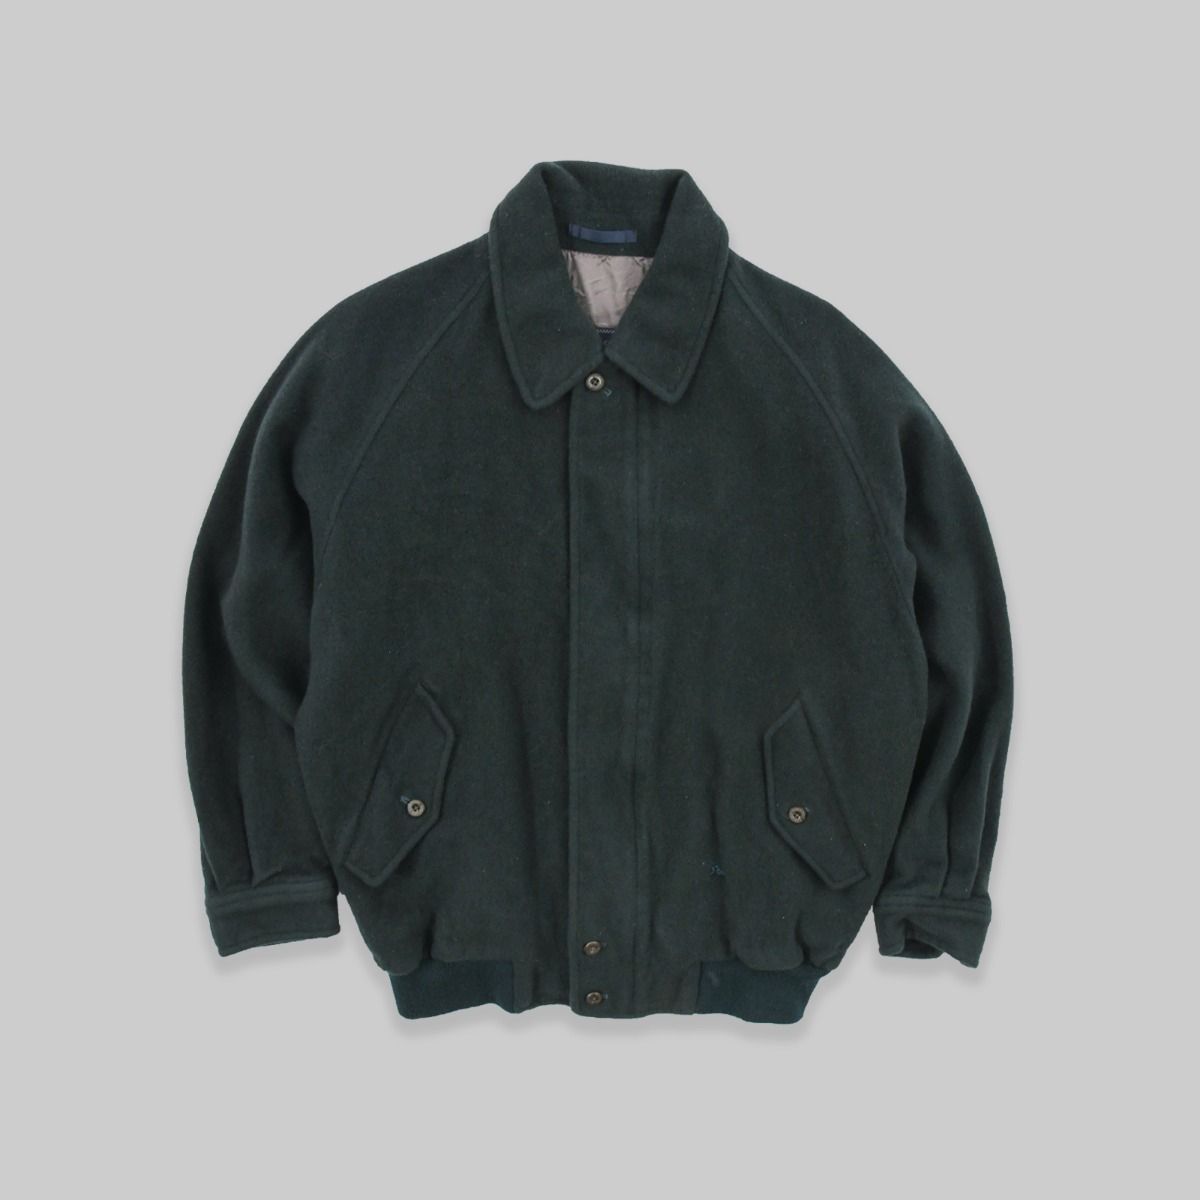 Burberry 1980s Wool Jacket